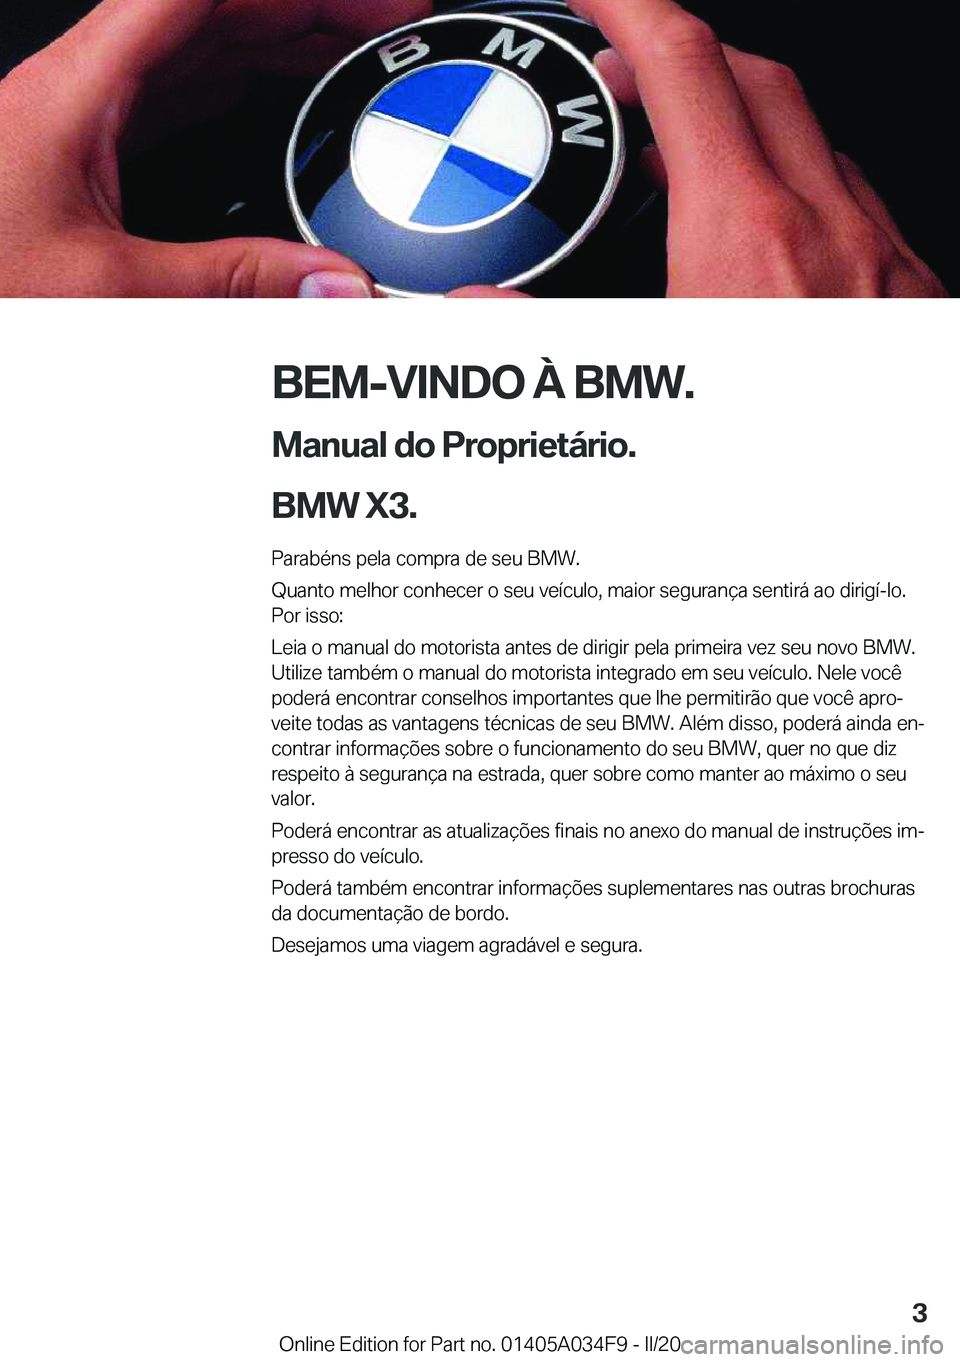 BMW X3 2020  Manual do condutor (in Portuguese) �B�E�M�-�V�I�N�D�O��À��B�M�W�.
�M�a�n�u�a�l��d�o��P�r�o�p�r�i�e�t�á�r�i�o�.
�B�M�W��X�3�. �P�a�r�a�b�é�n�s��p�e�l�a��c�o�m�p�r�a��d�e��s�e�u��B�M�W�.
�Q�u�a�n�t�o��m�e�l�h�o�r��c�o�n�h�